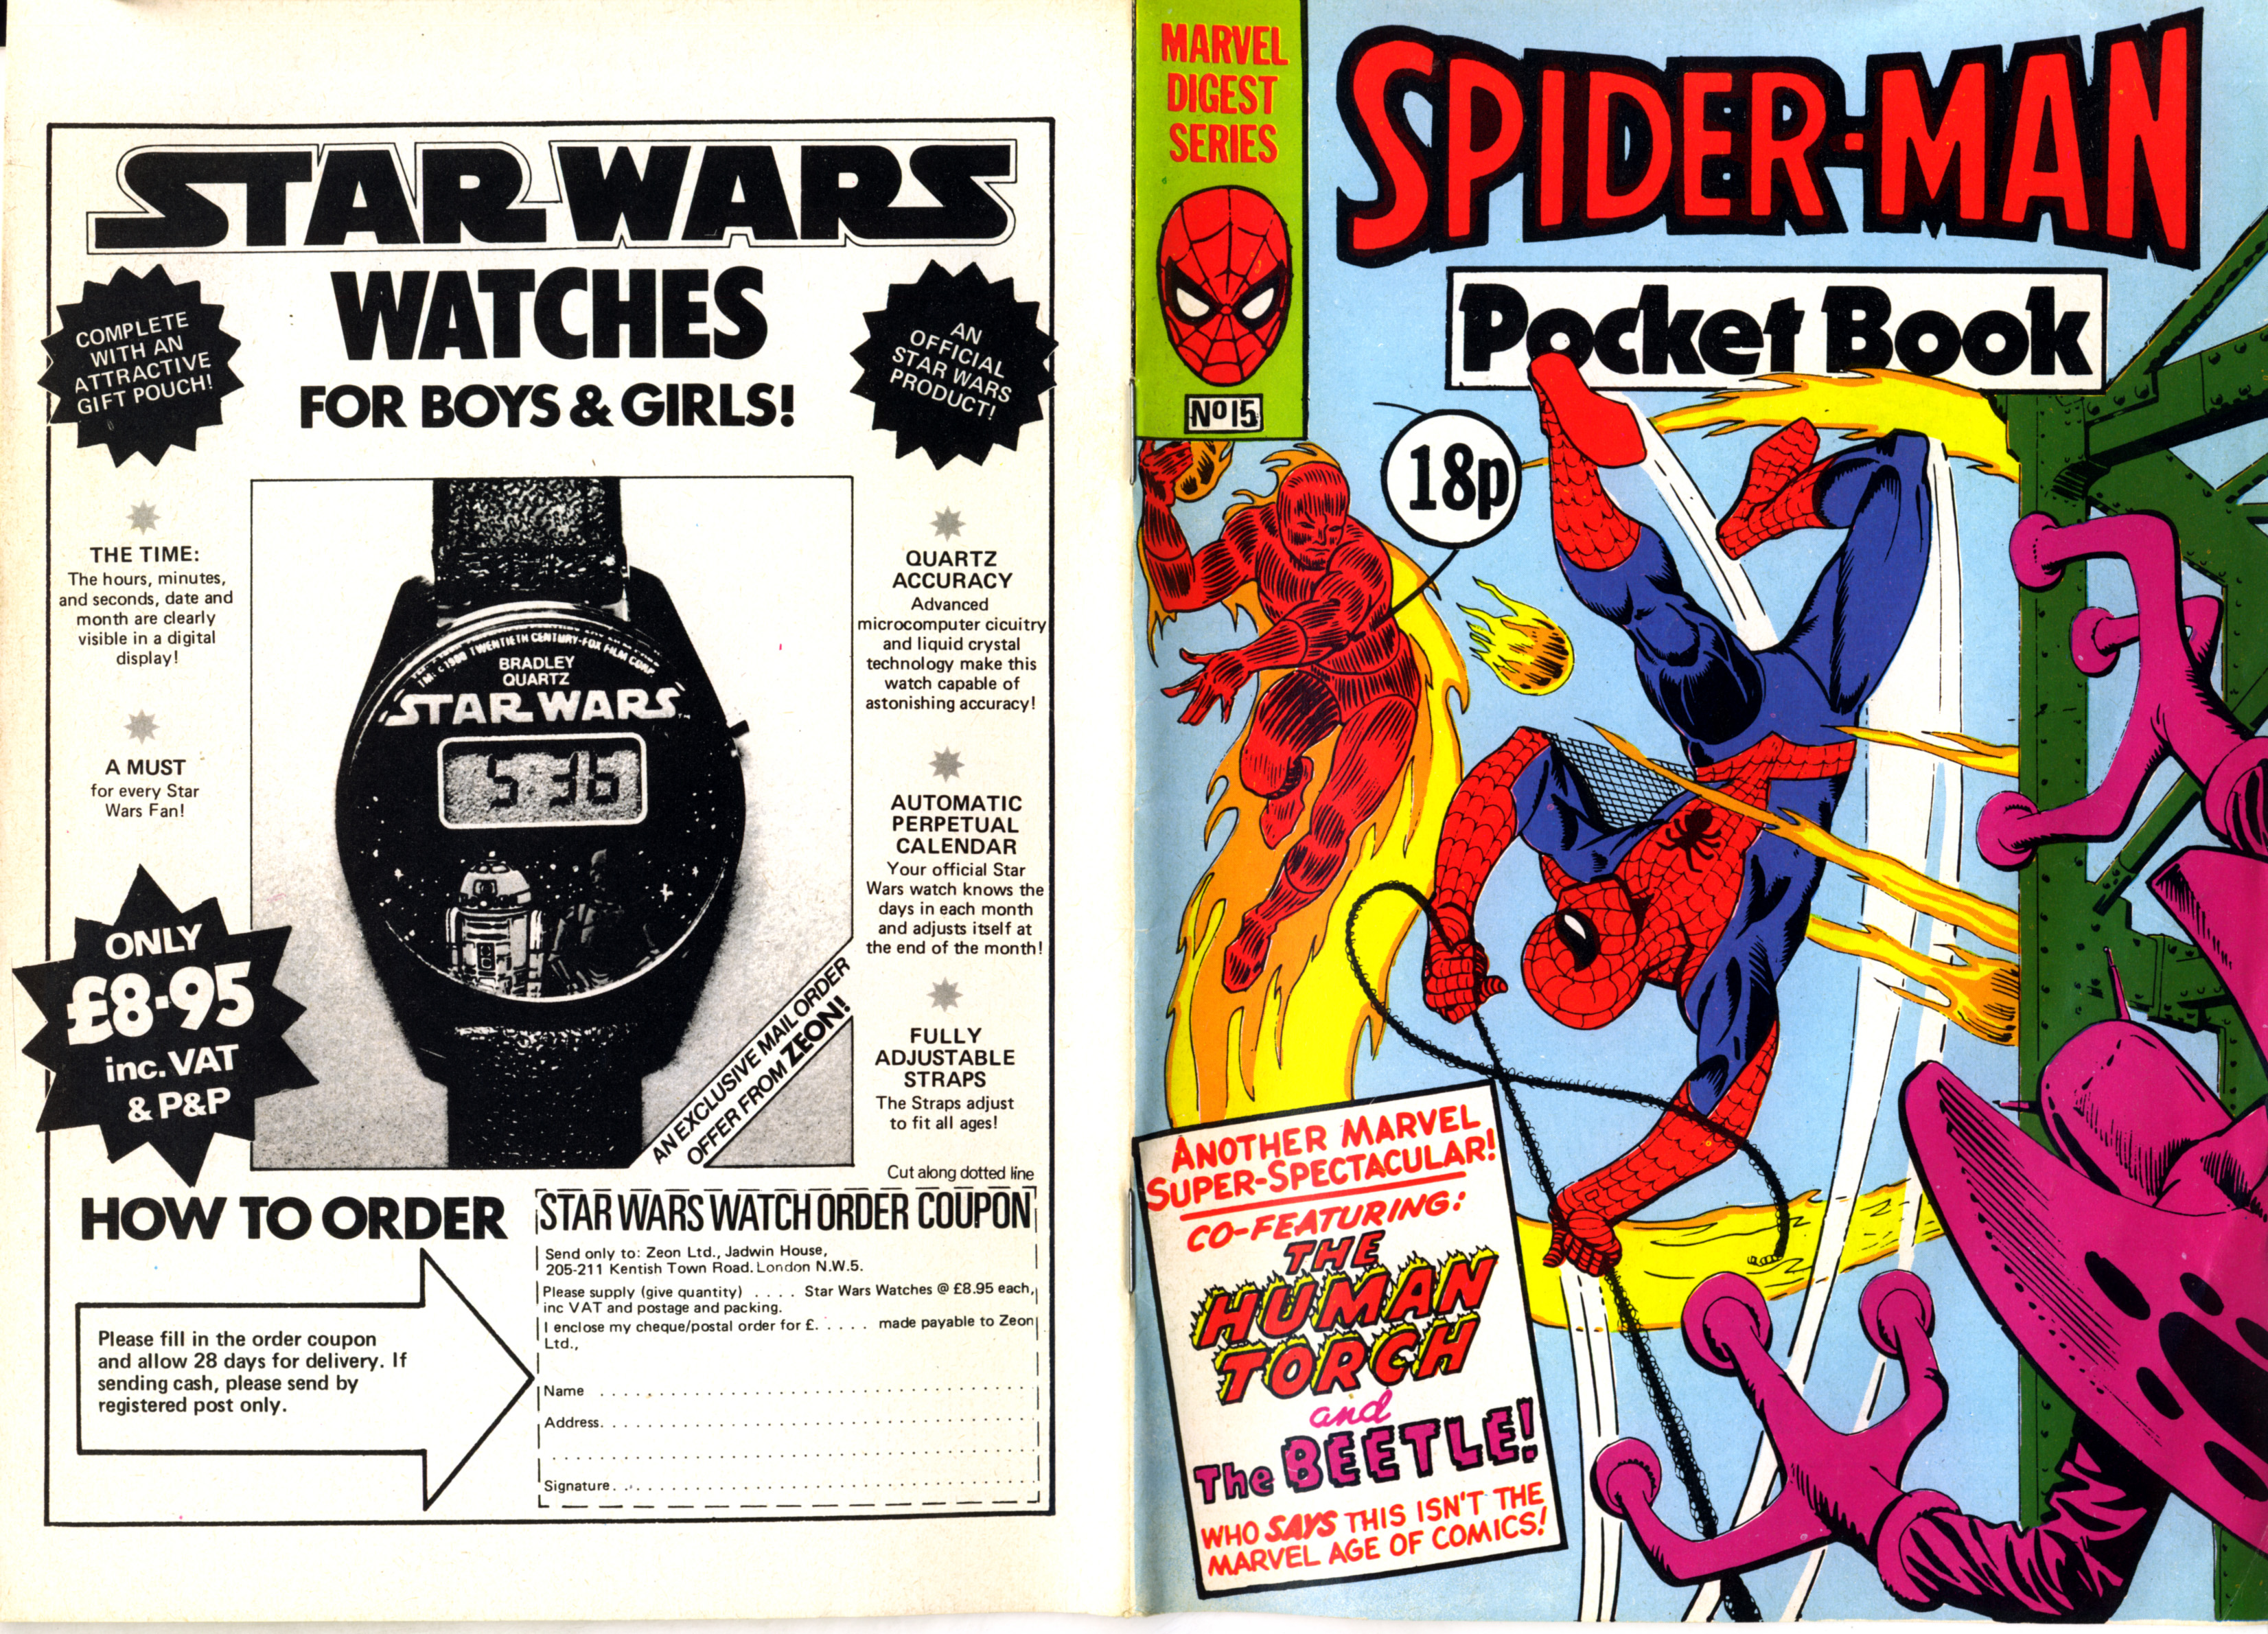 Read online Spider-Man Pocket Book comic -  Issue #15 - 2